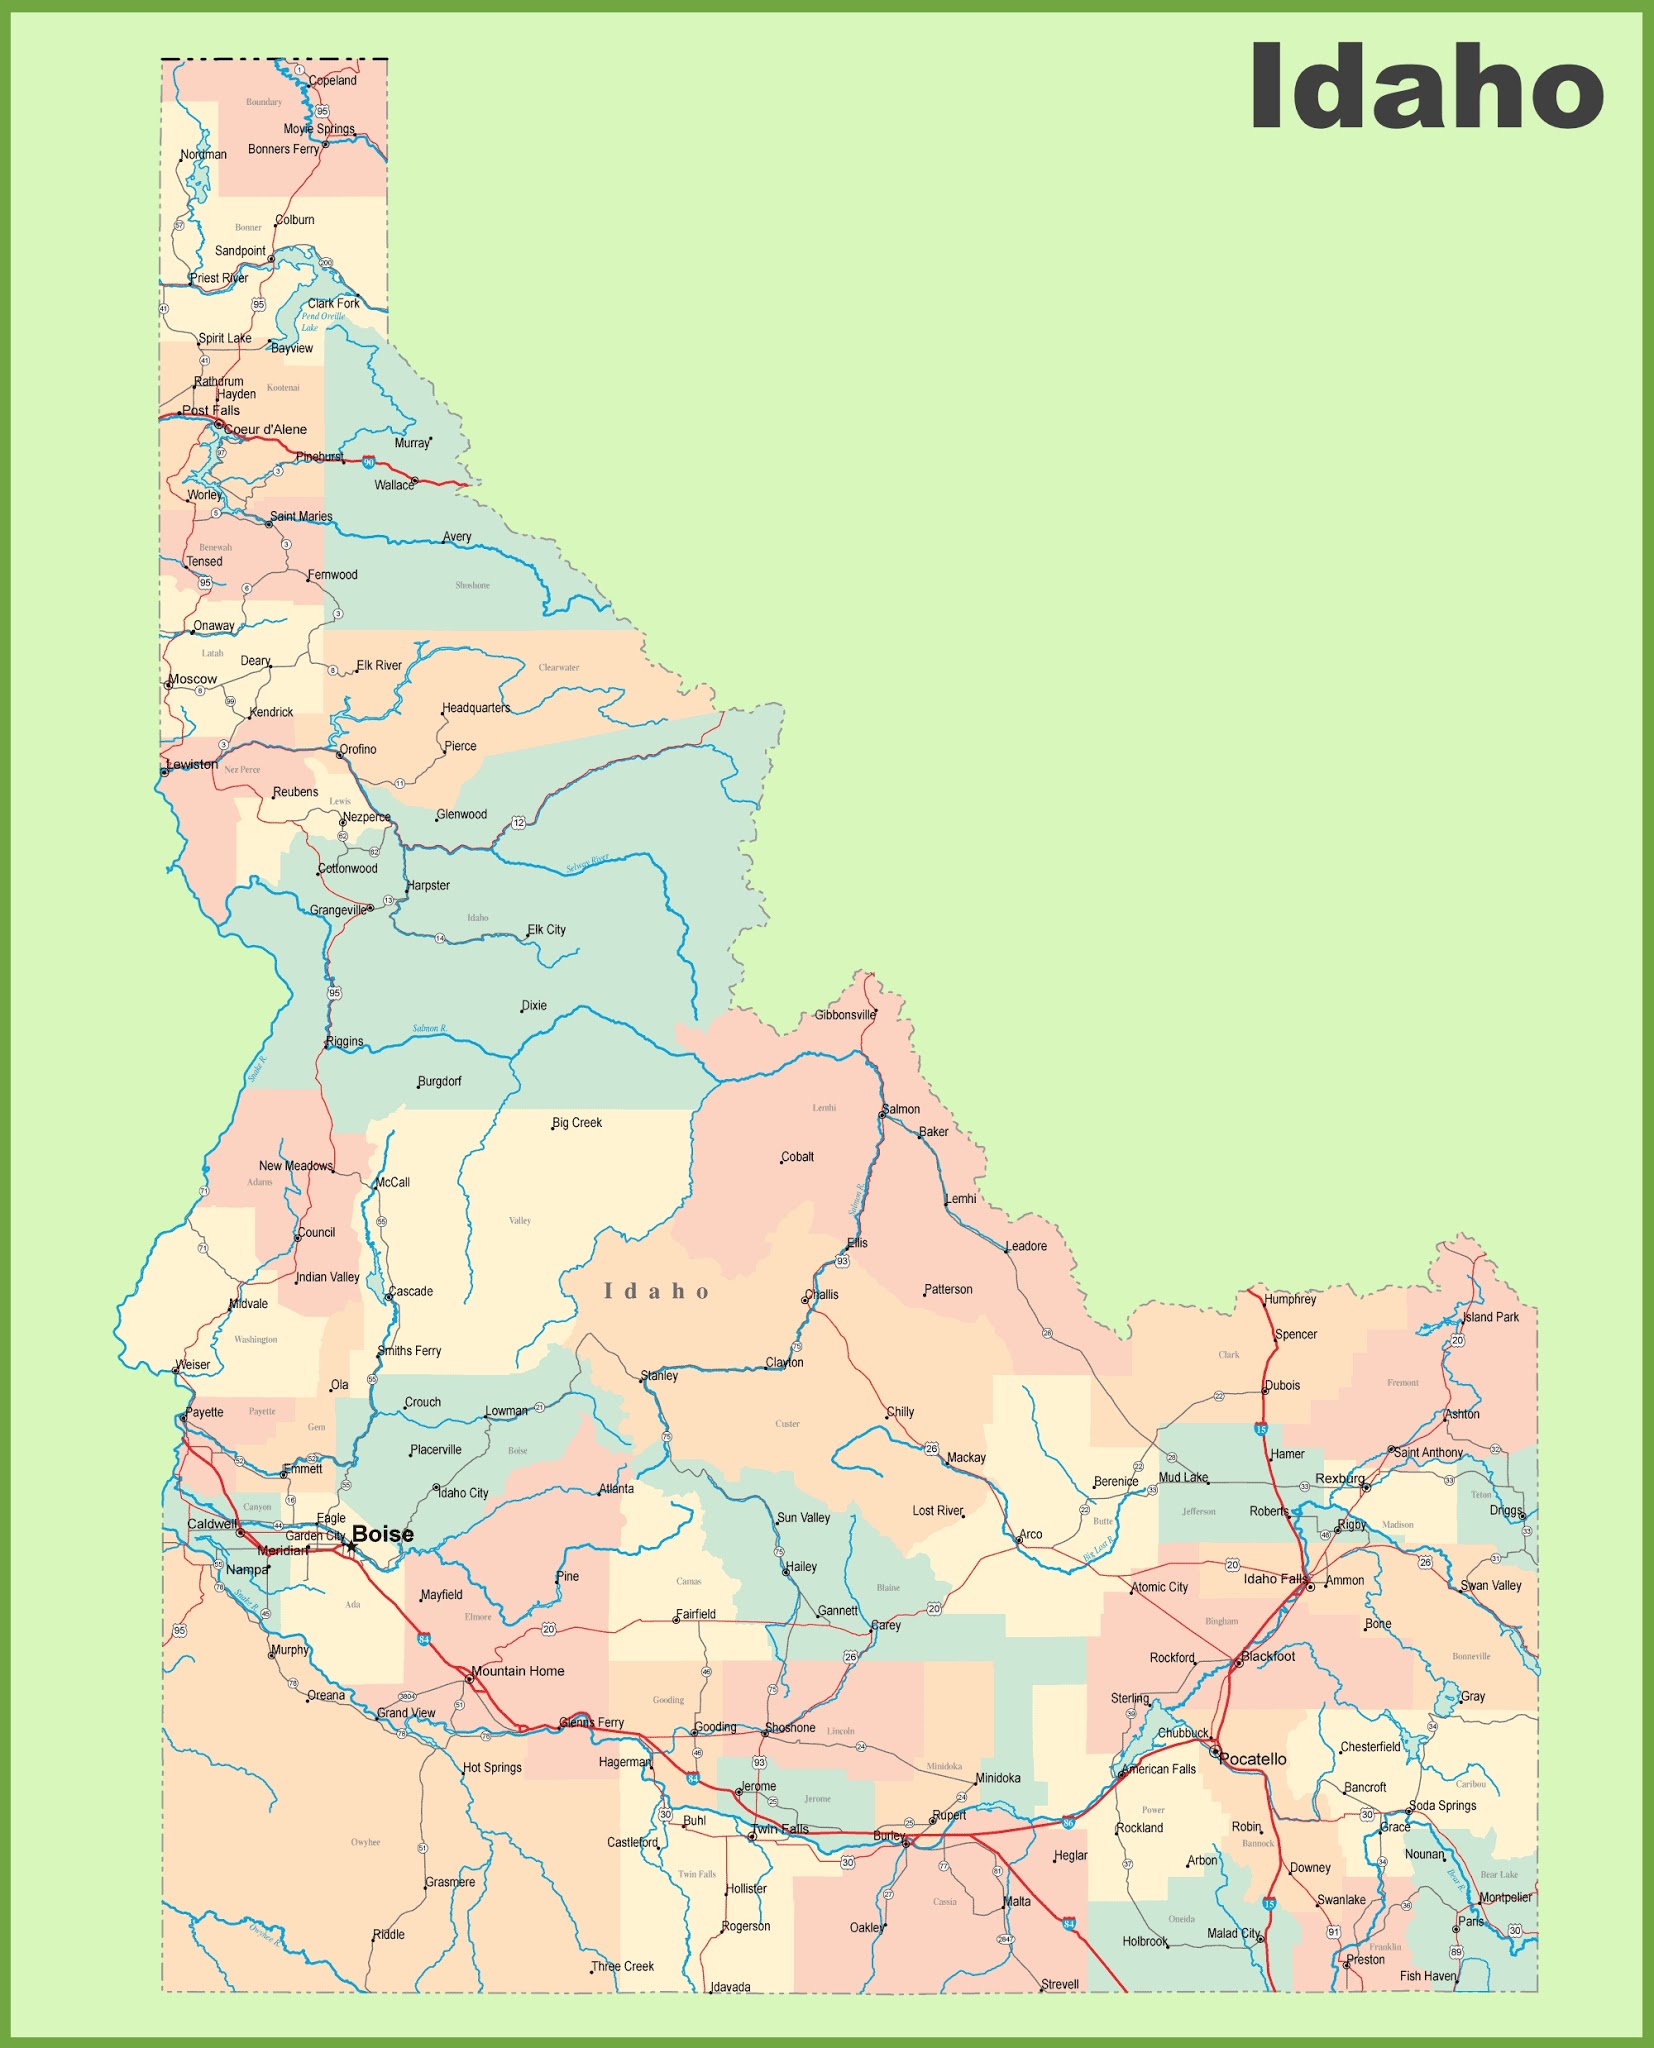 idaho-state-map